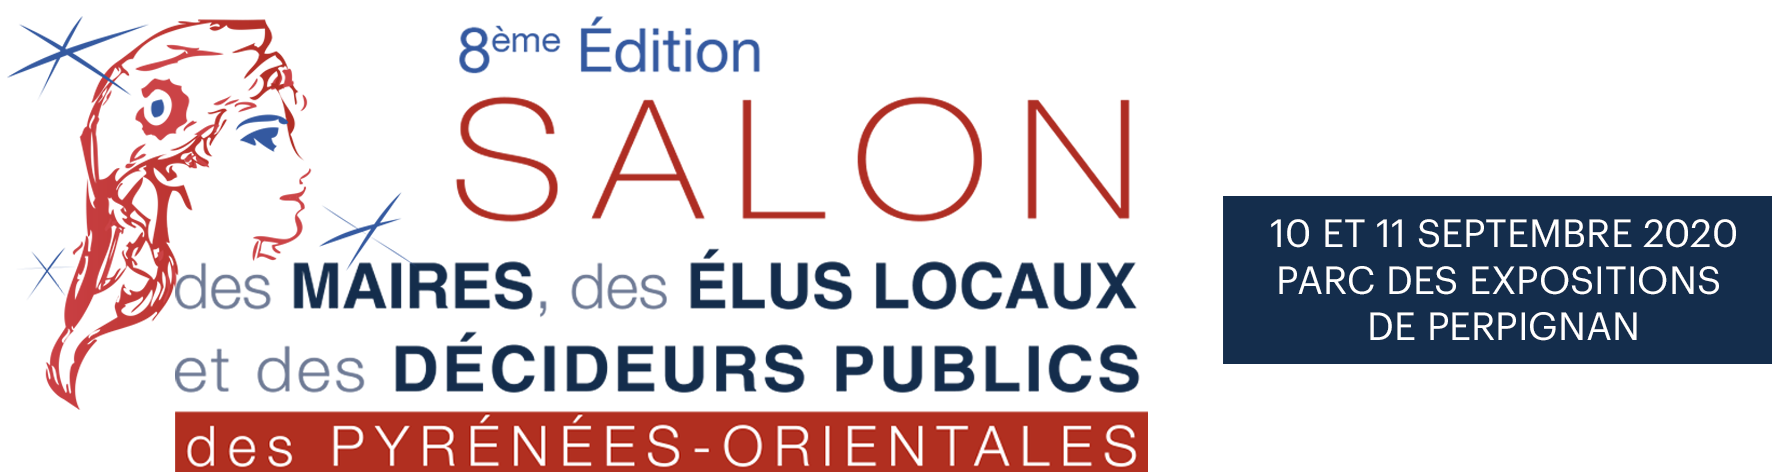 Logo salon des maires large